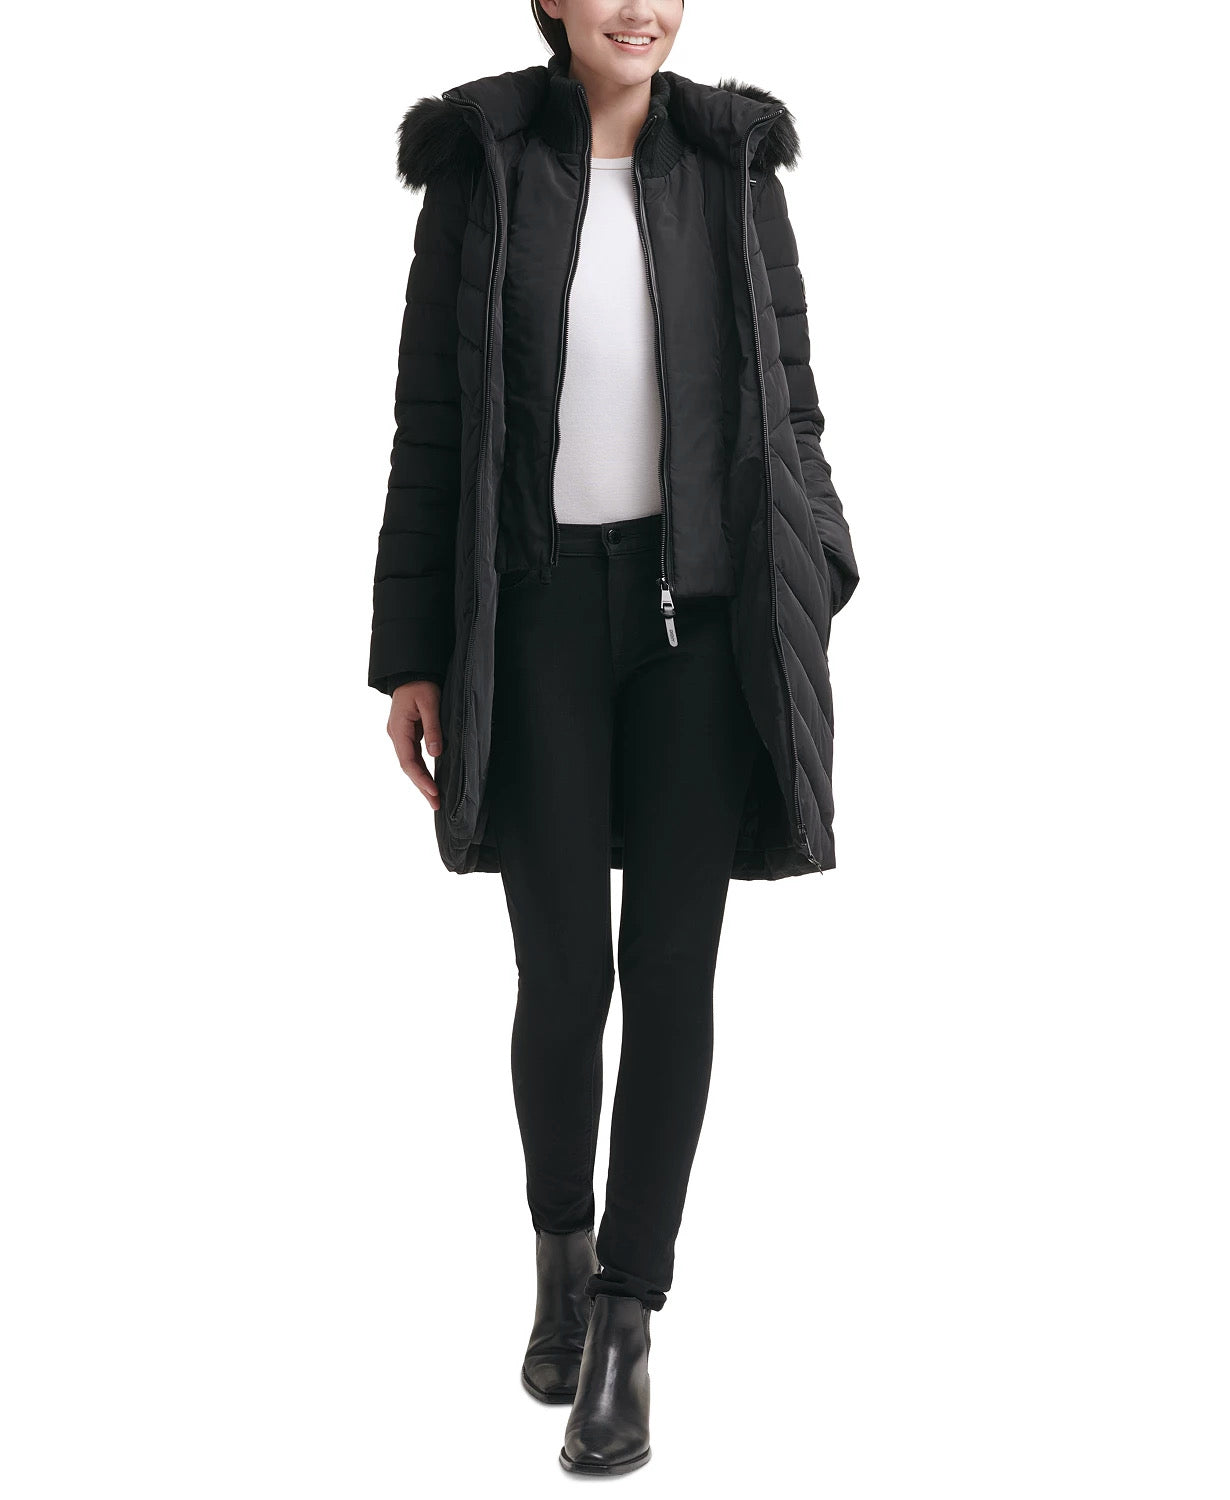 Dkny Women's Faux-Fur-Trim Hooded Puffer Coat Black XS Extra Small